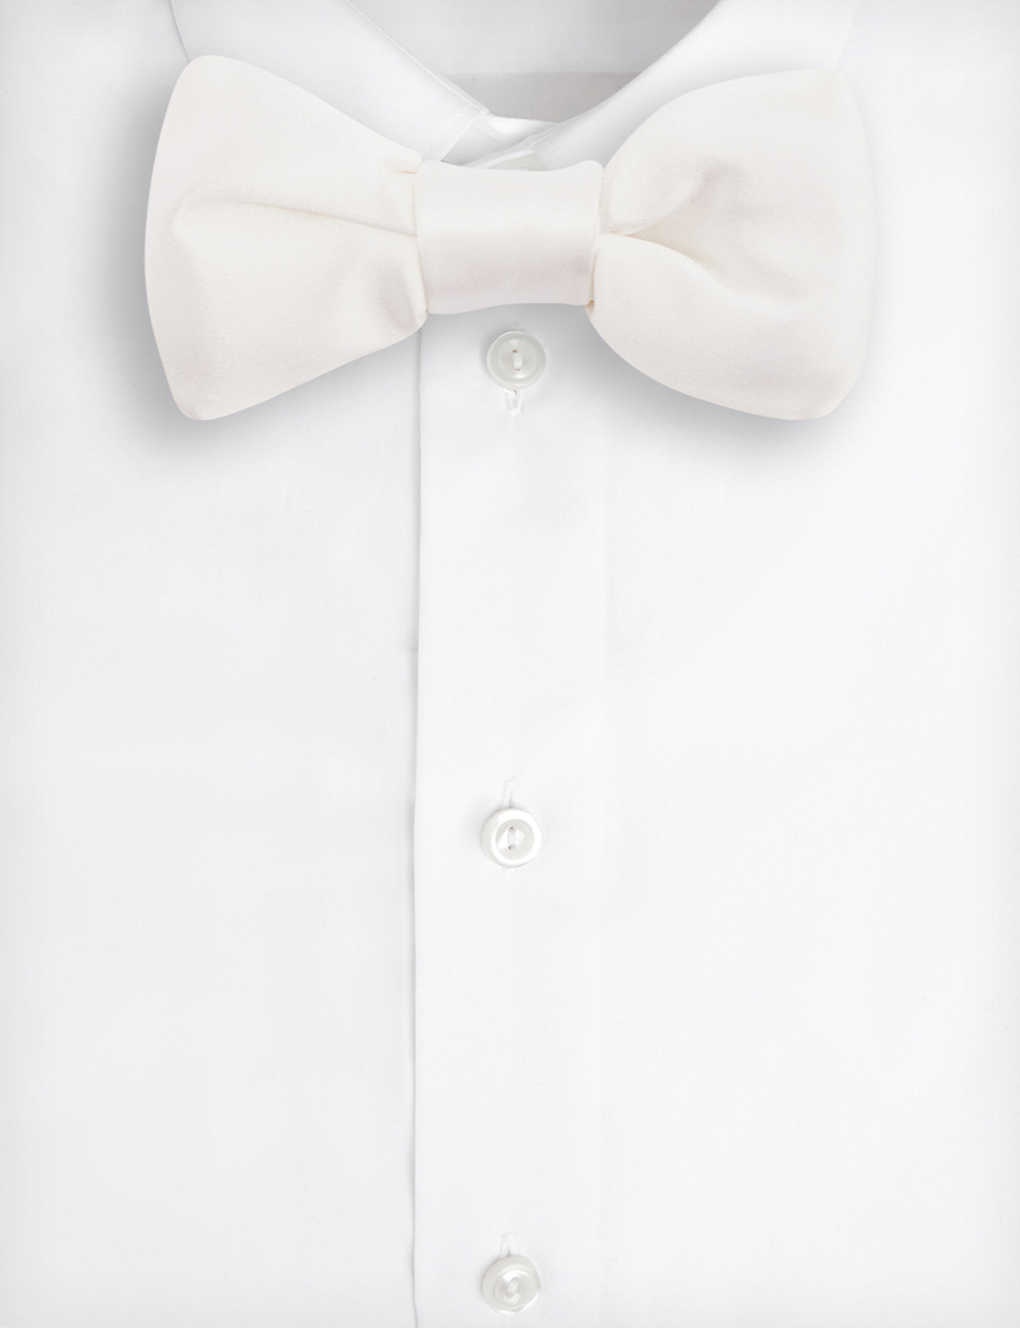 GG-plaque silk bow tie